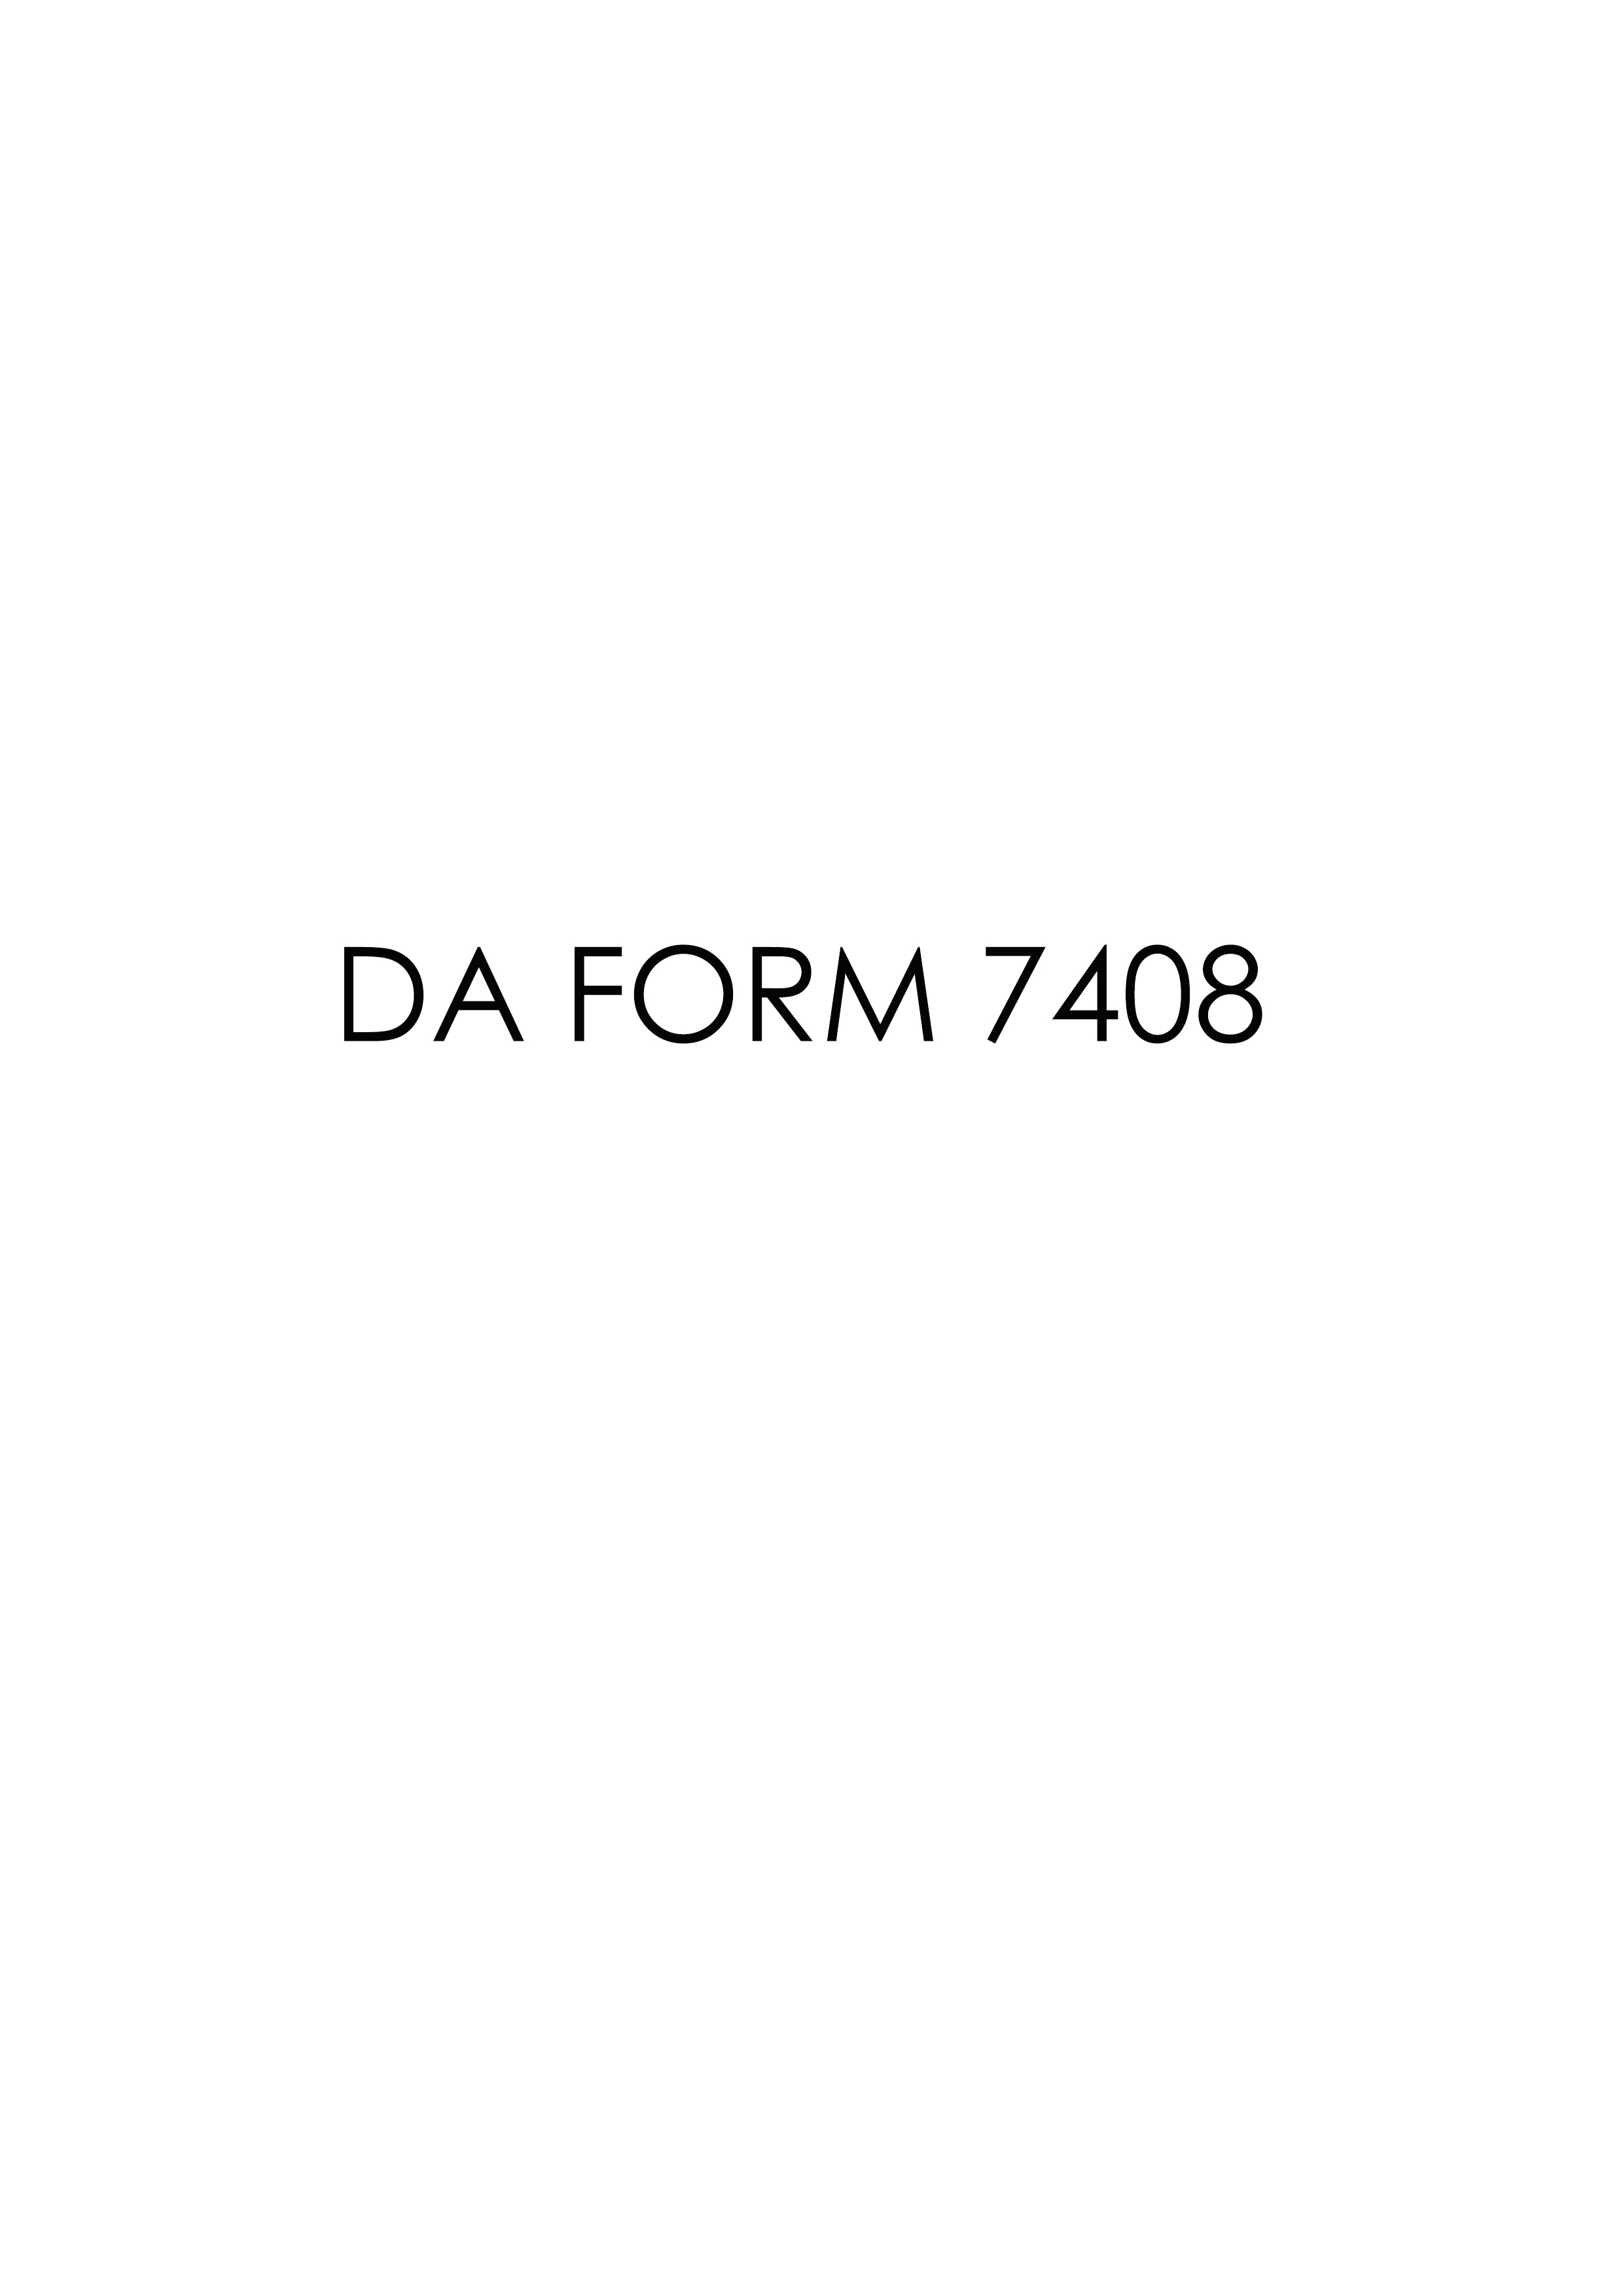 da Form 7408 fillable